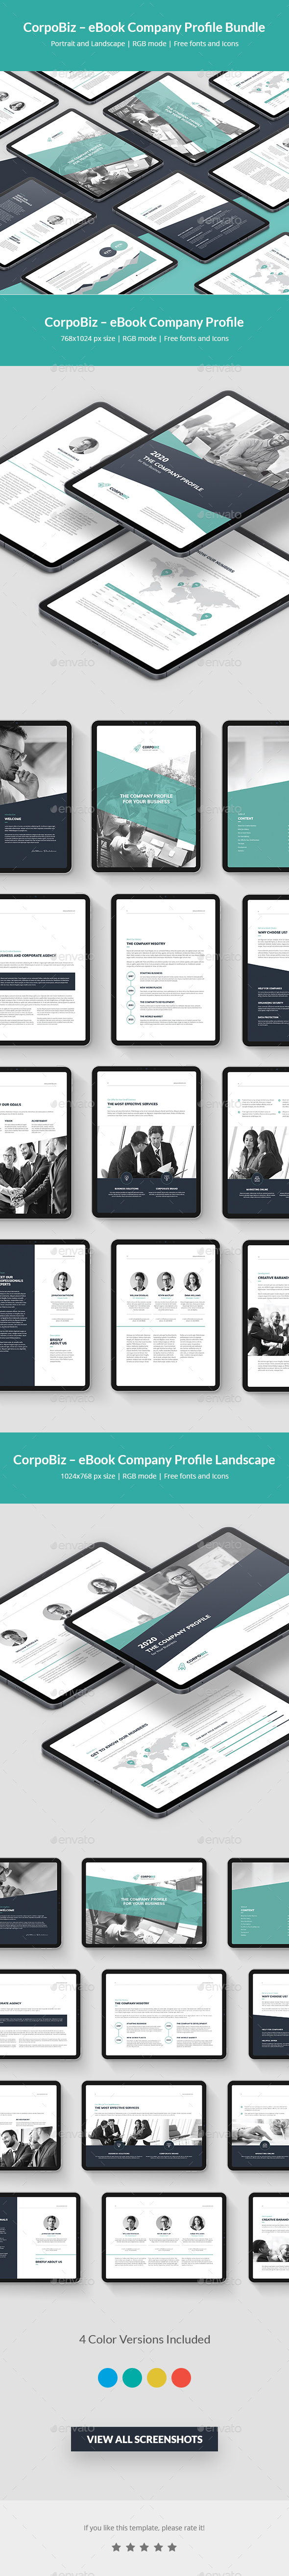 CorpoBiz – Business and Corporate eBook Company Profile Bundle 2 in 1